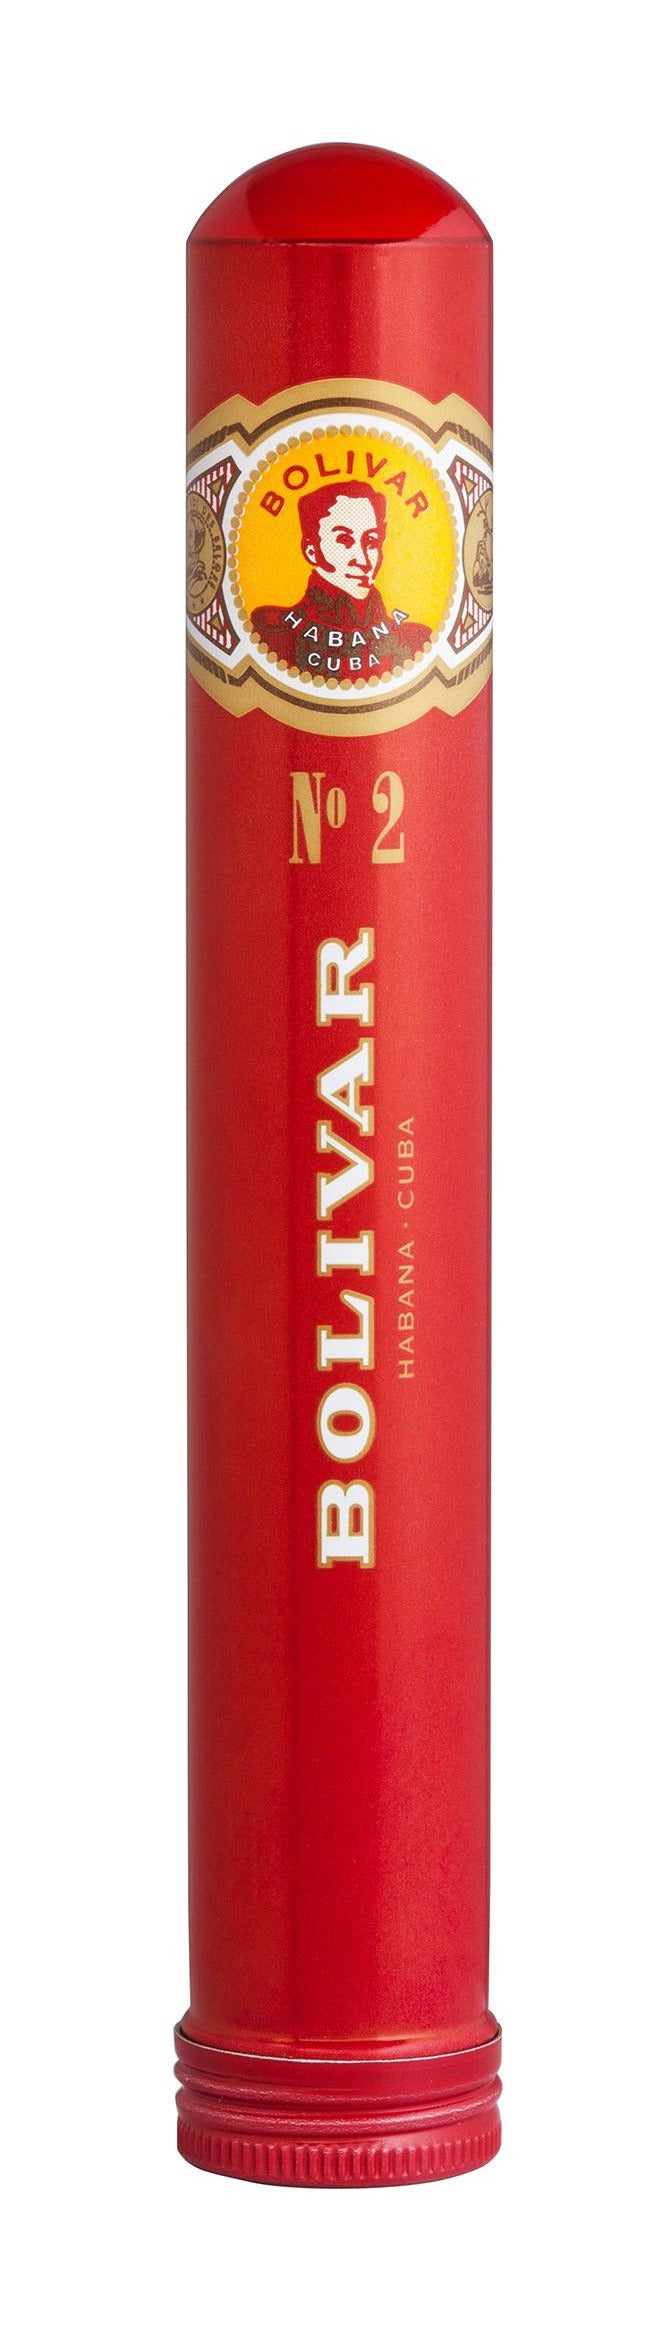 Bolivar No. 2 Zigarre im Petit Corona Format im Alu Tubo